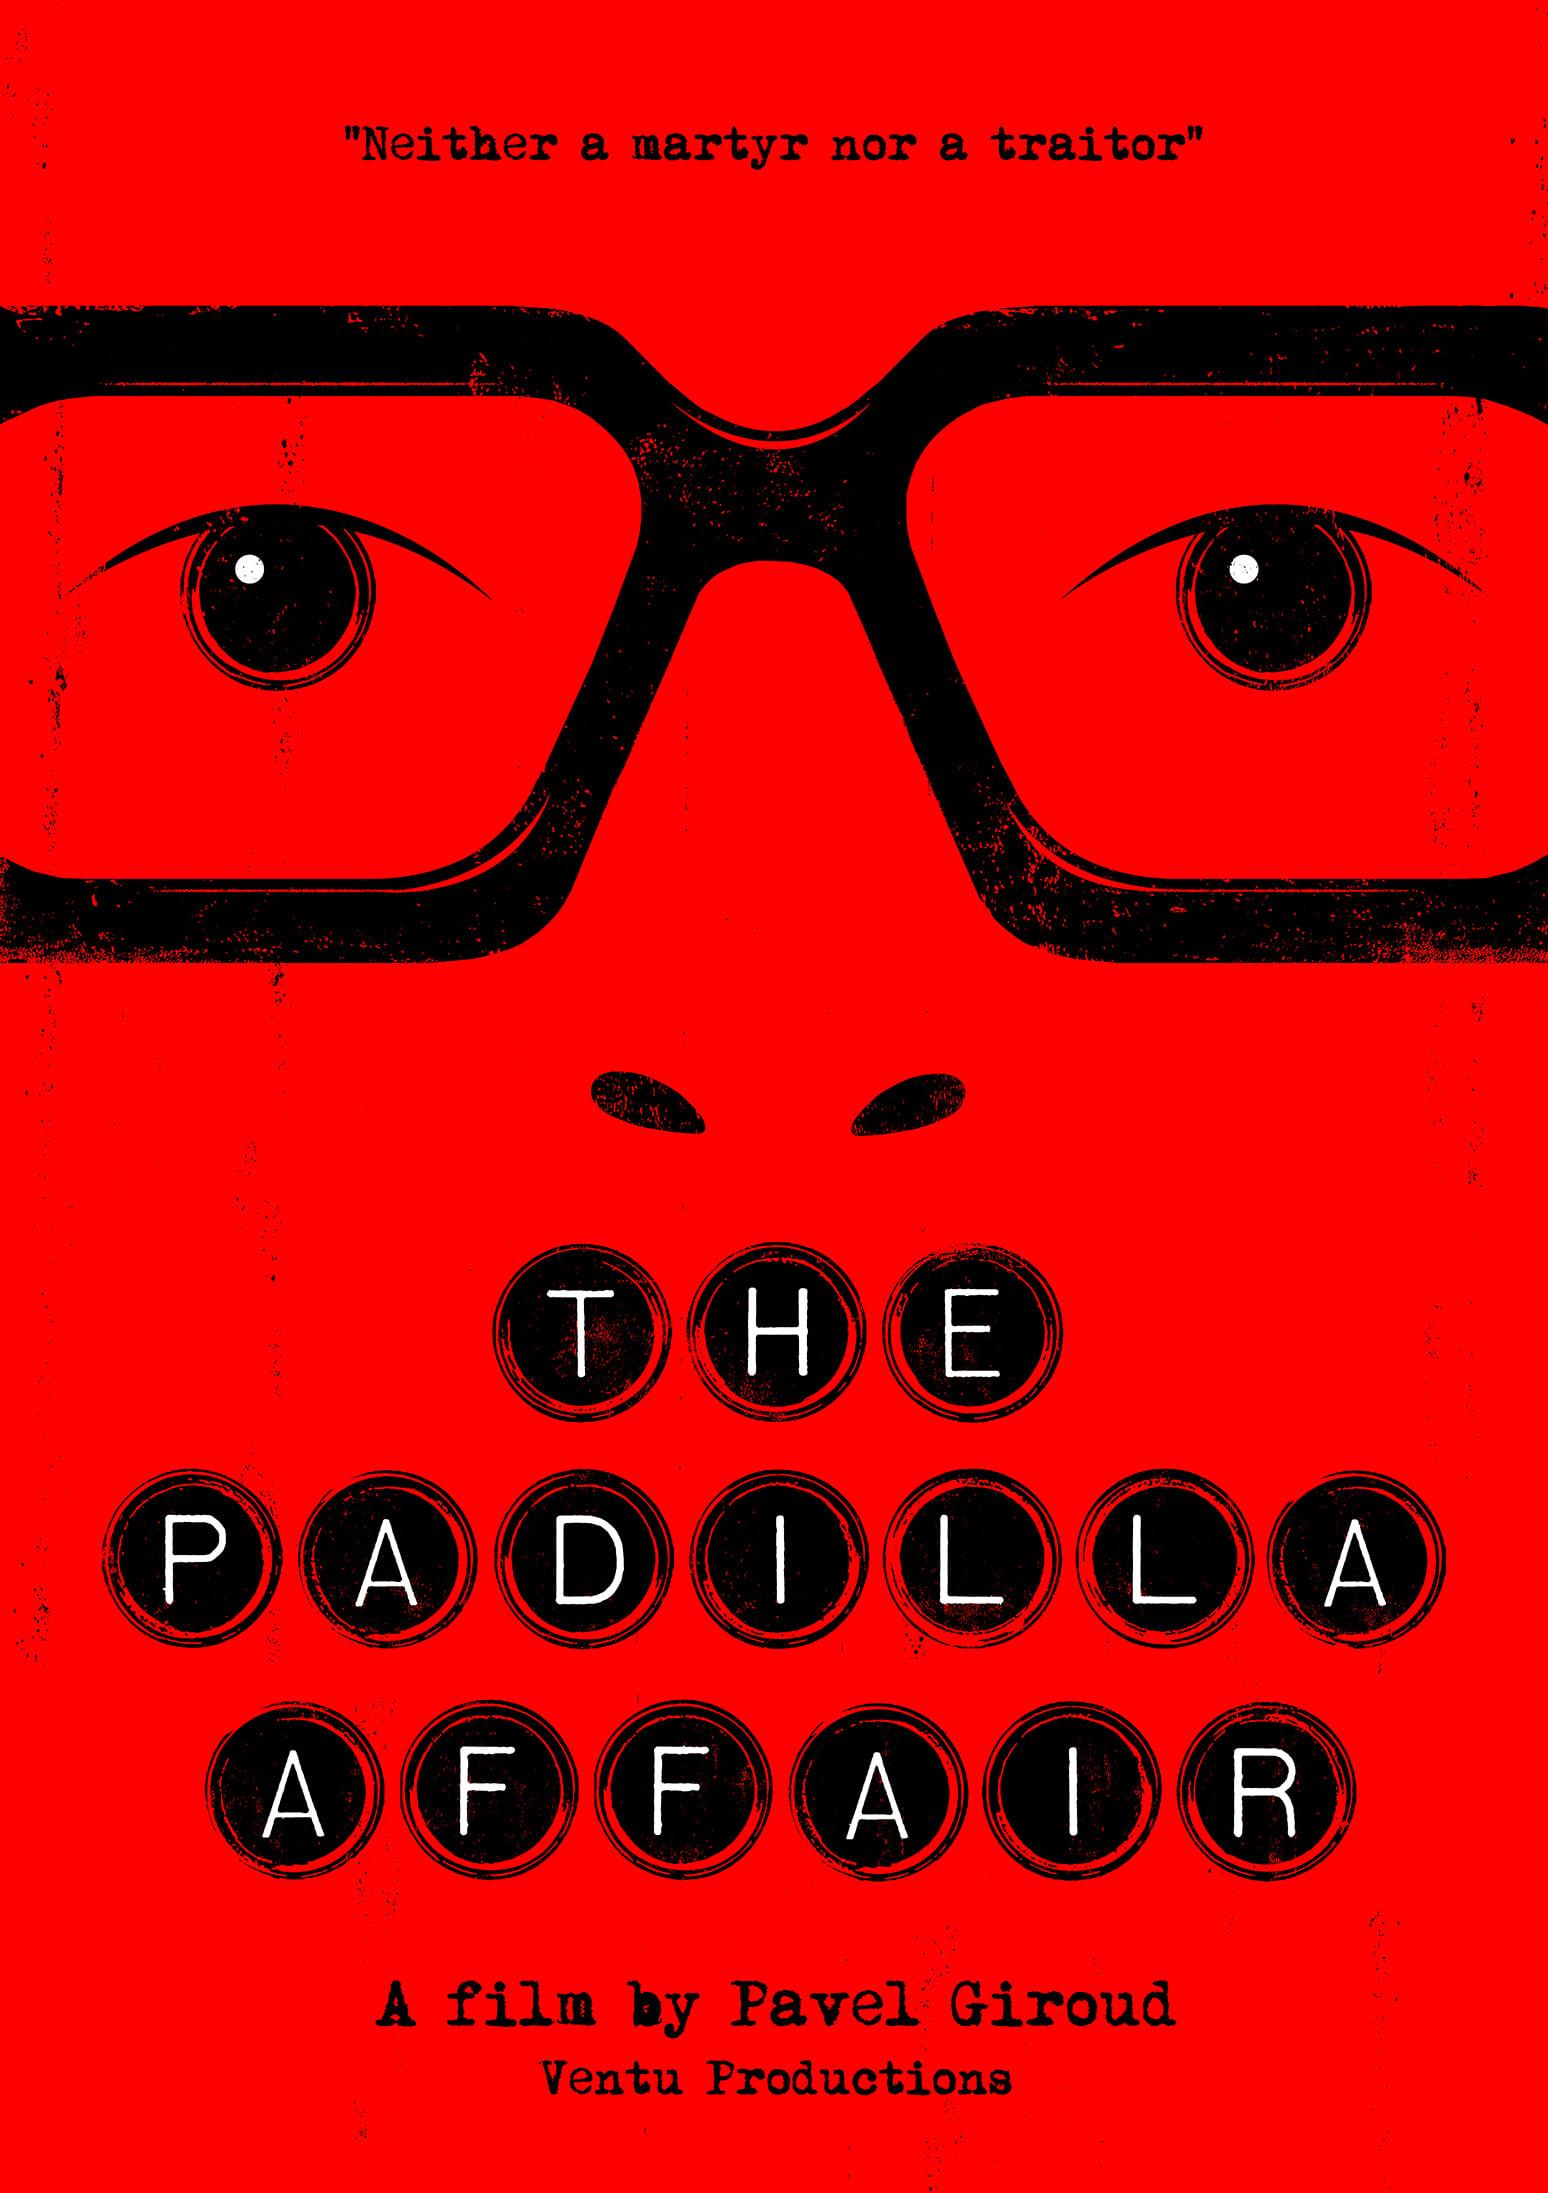 The Padilla Affair poster